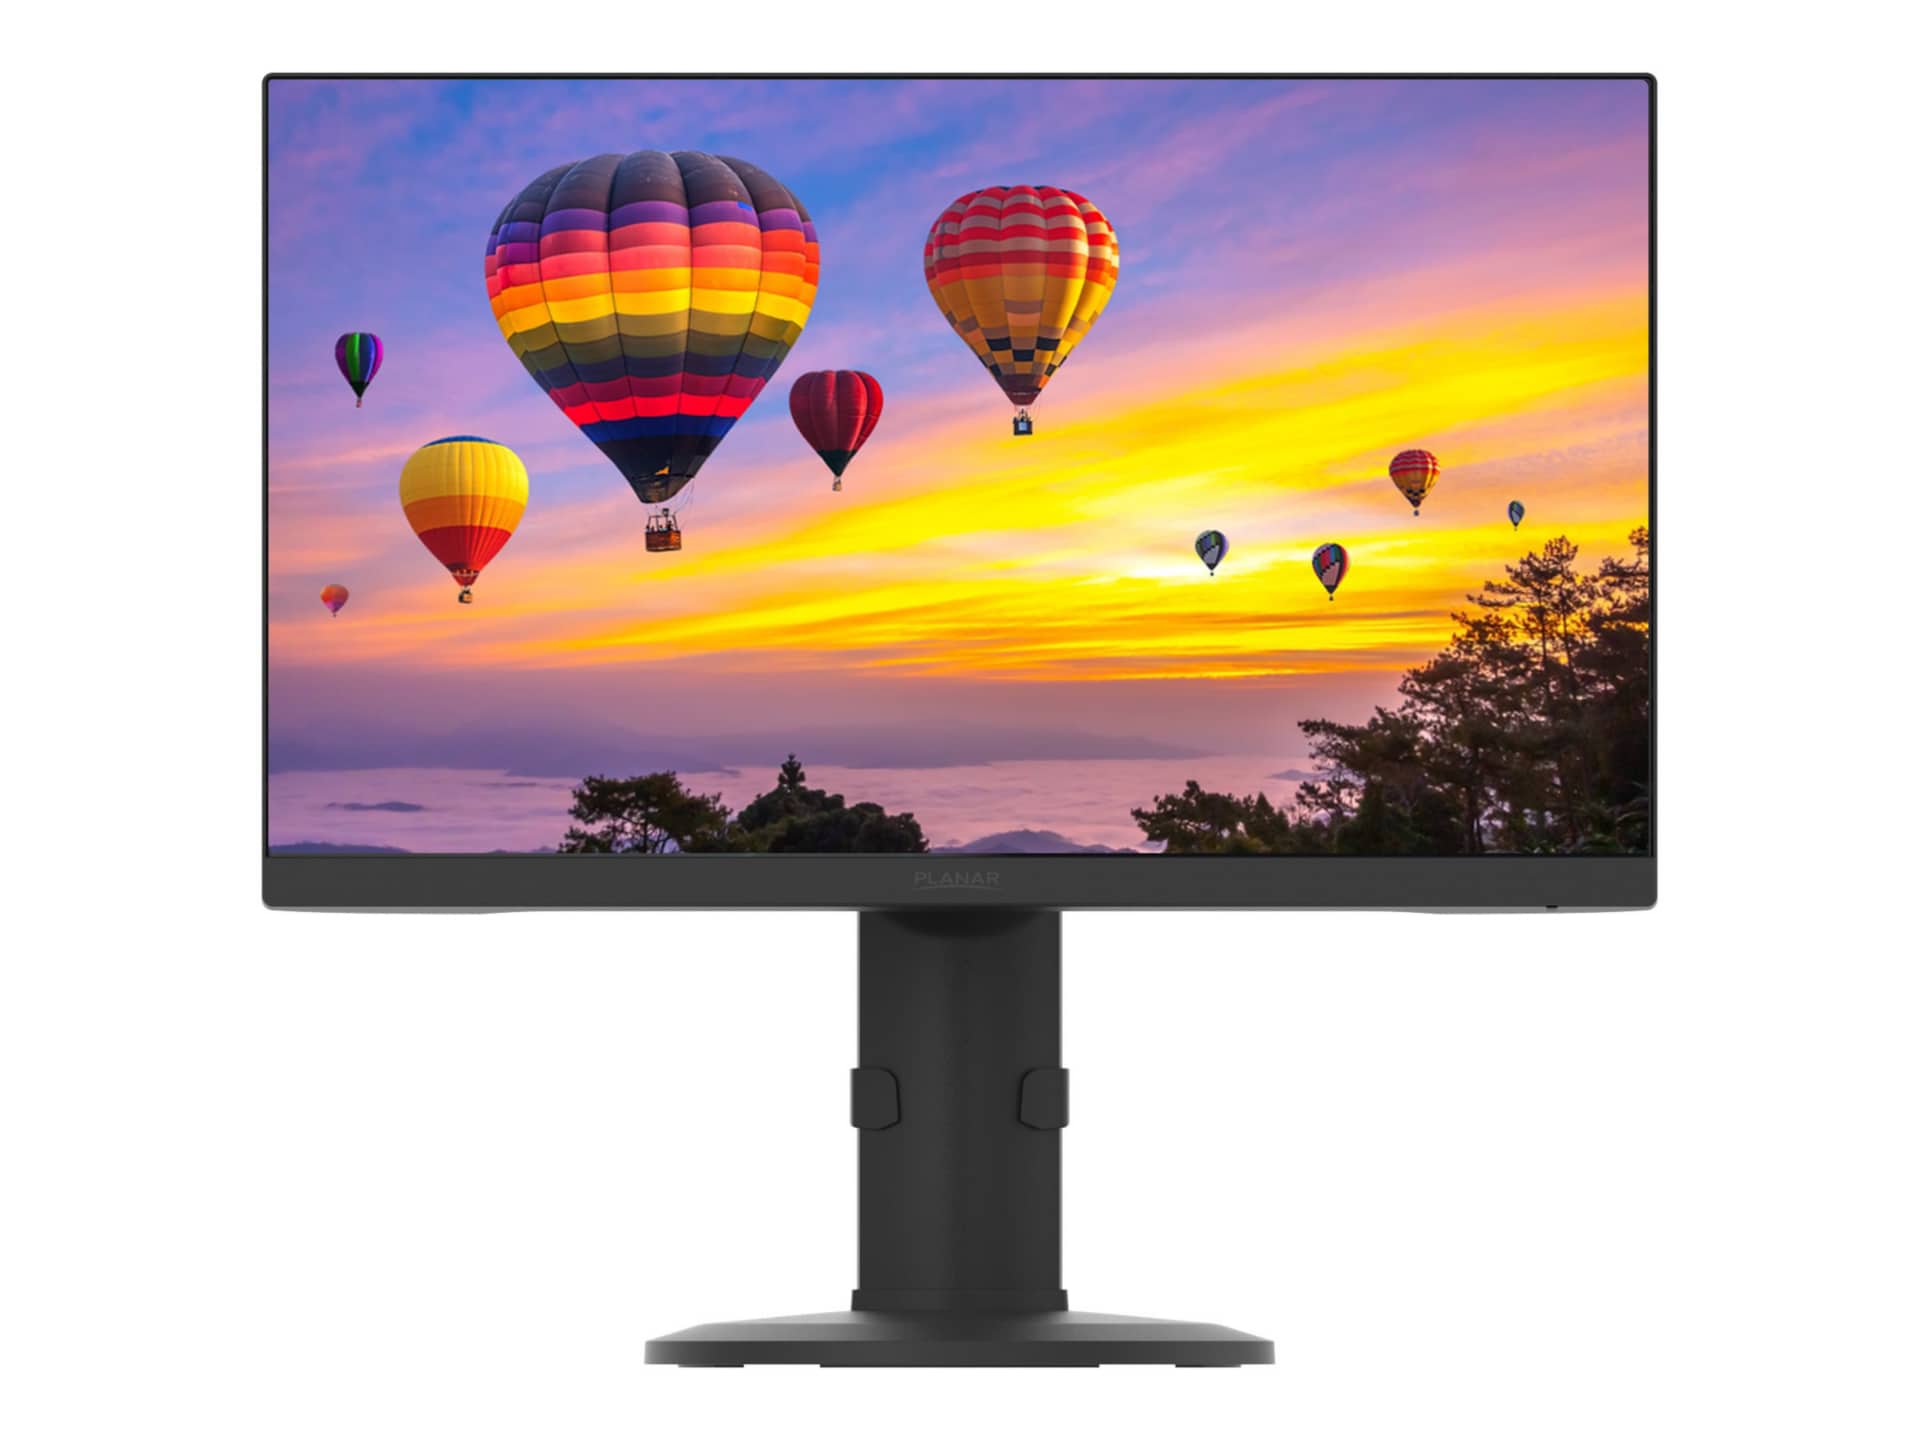 Planar PZN2410 - LCD monitor - Full HD (1080p) - 24" - with 3-Years Warranty Planar Customer First